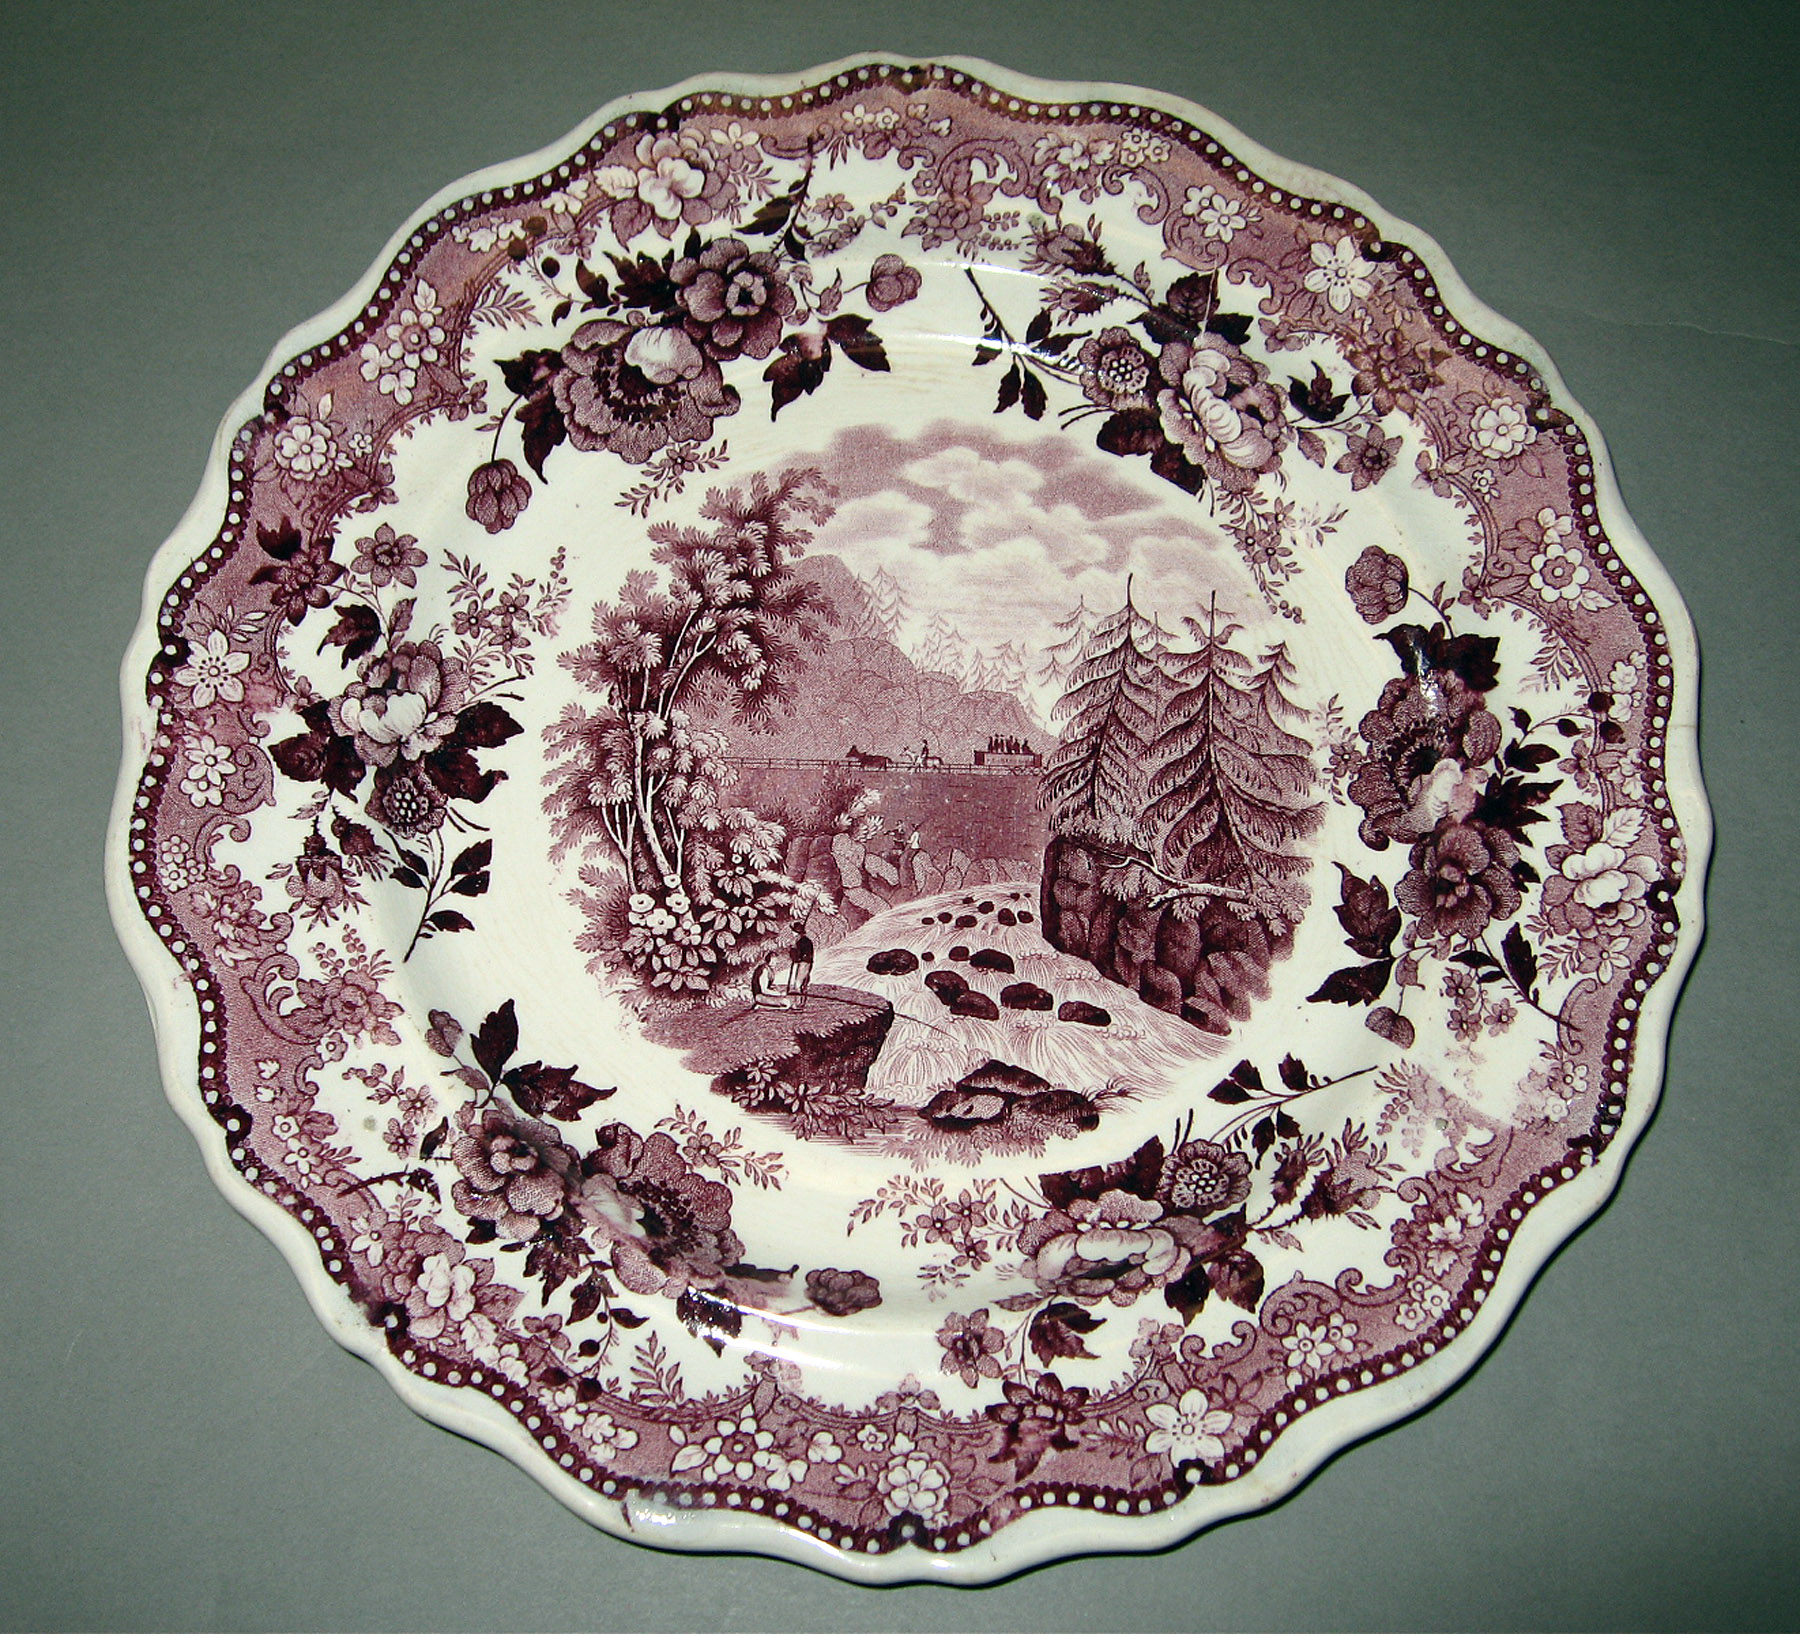 1966.0830 Earthenware plate